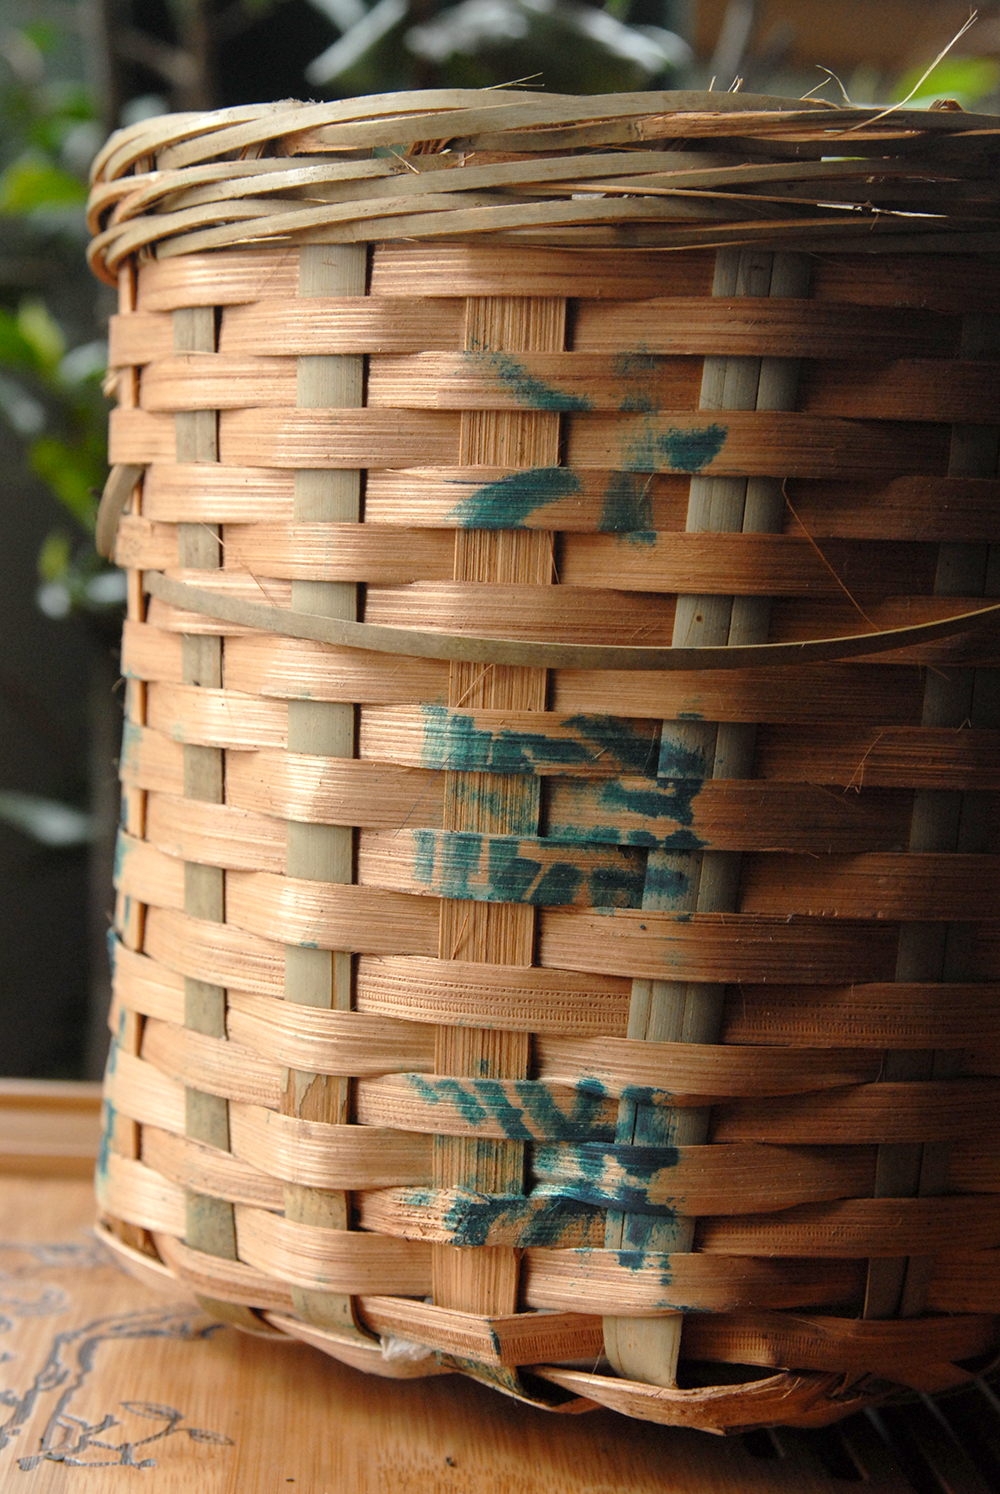 2005 Liu Bao tea in Bamboo Basket   3607 